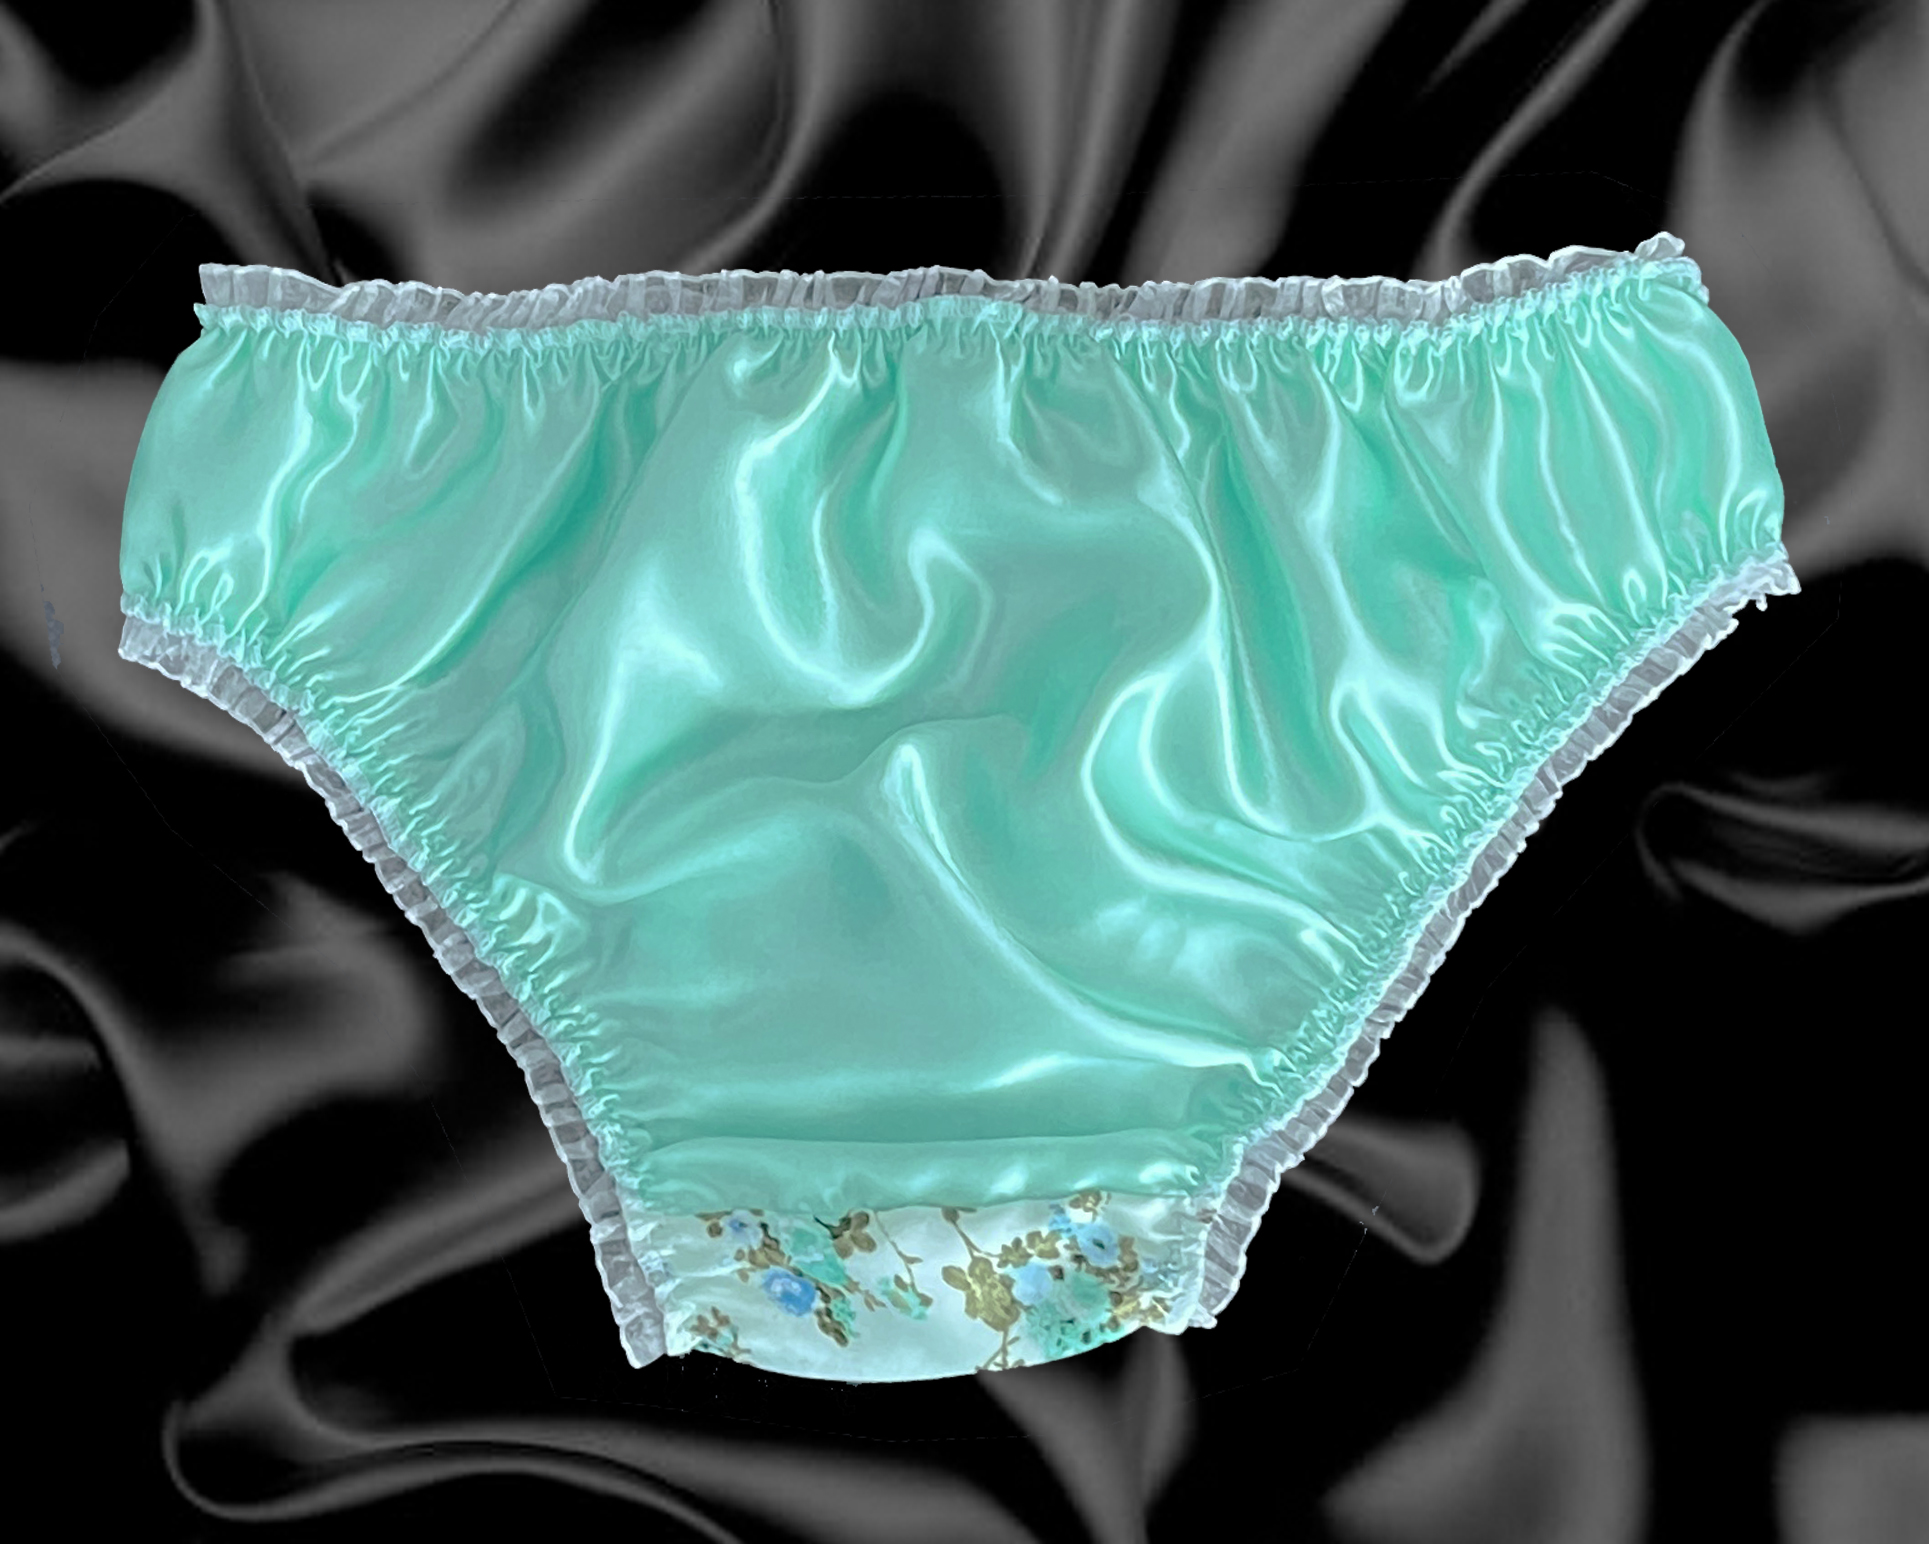 Mint Green Satin Floral Frilly Lace Sissy Bikini Knickers Panties Size 10 20 £13 99 Picclick Uk